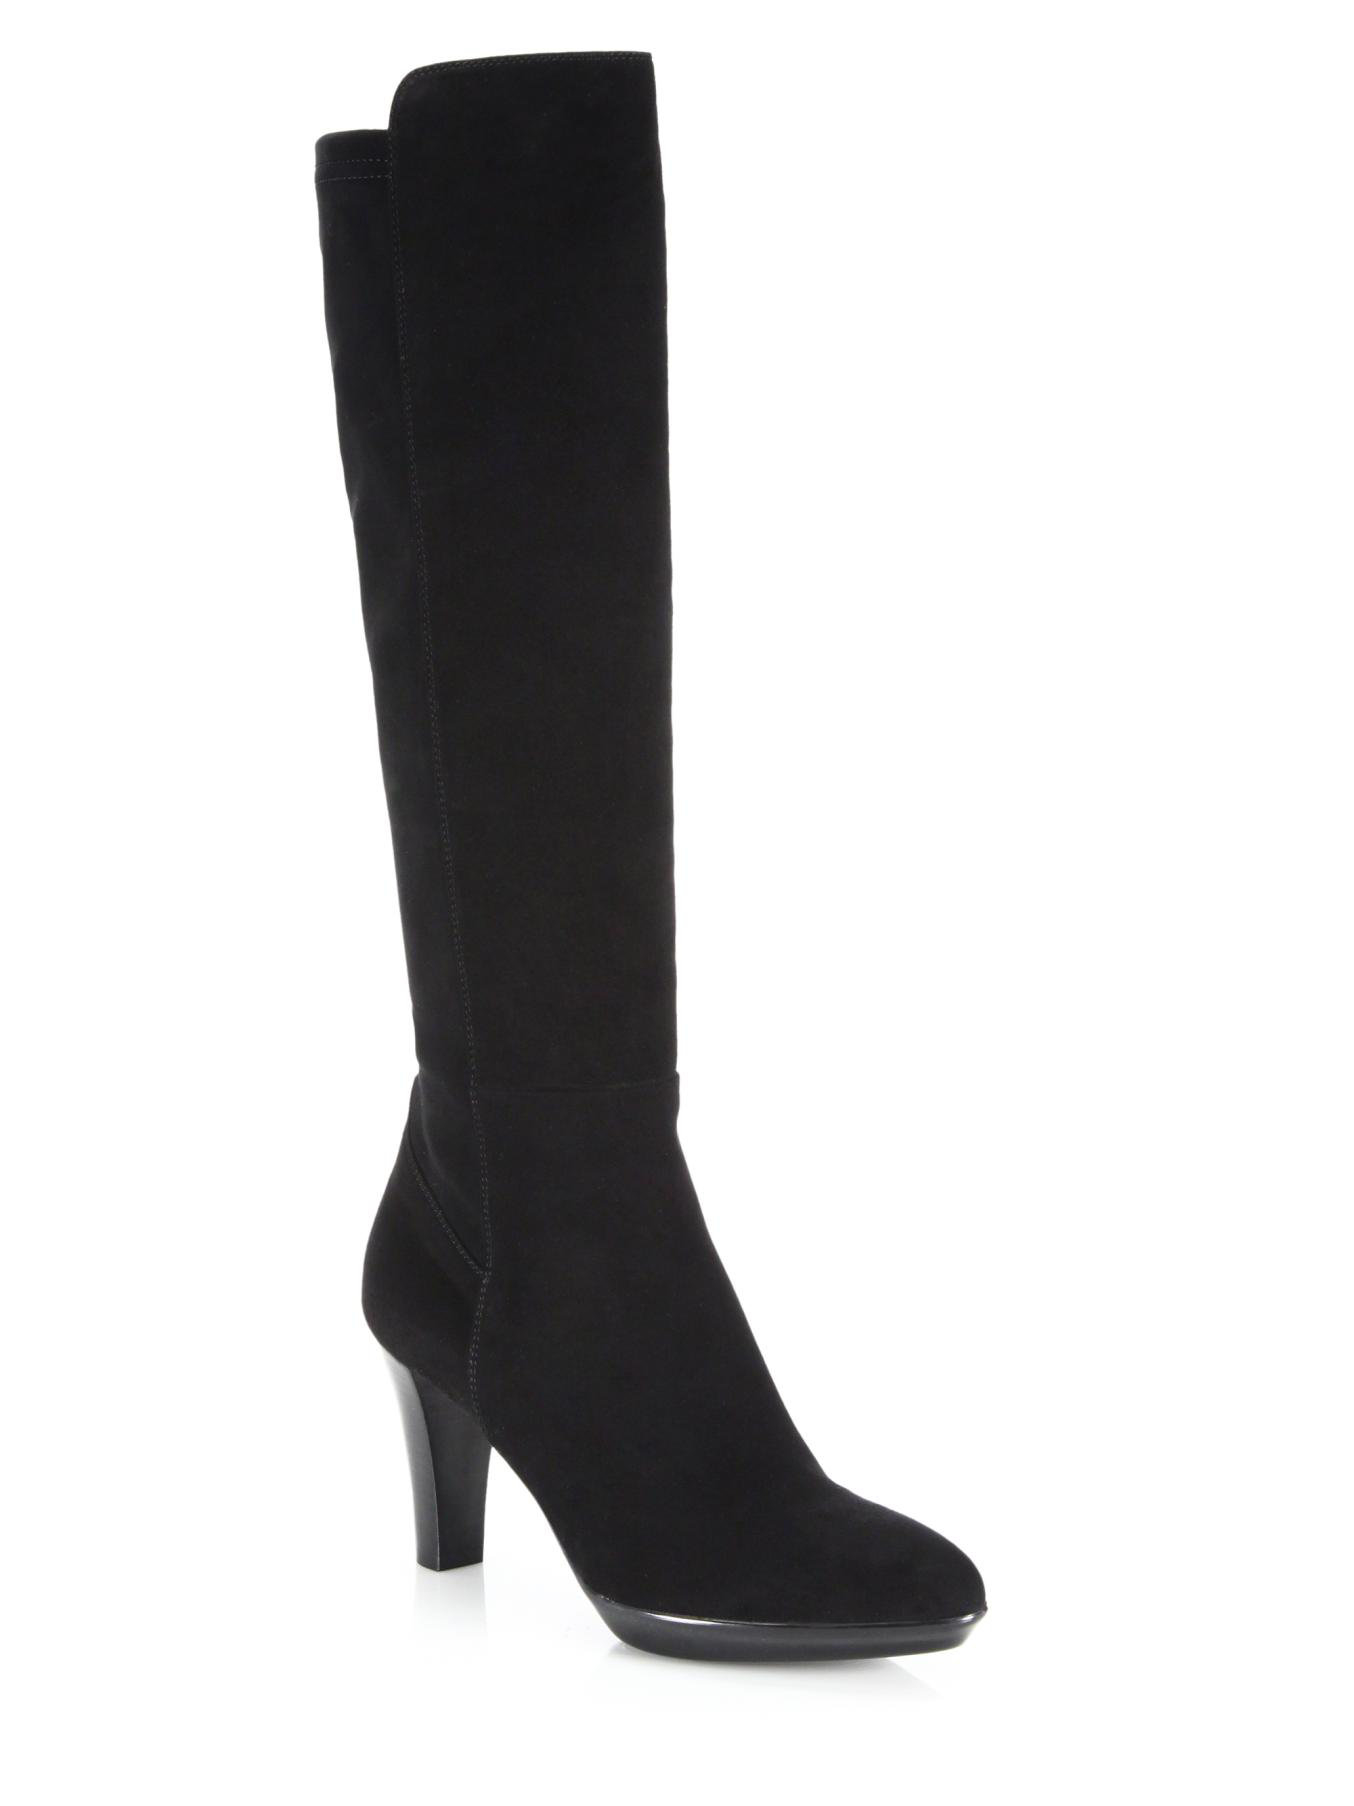 Lyst - Aquatalia Raine Stretch Suede Knee-high Boots in Black